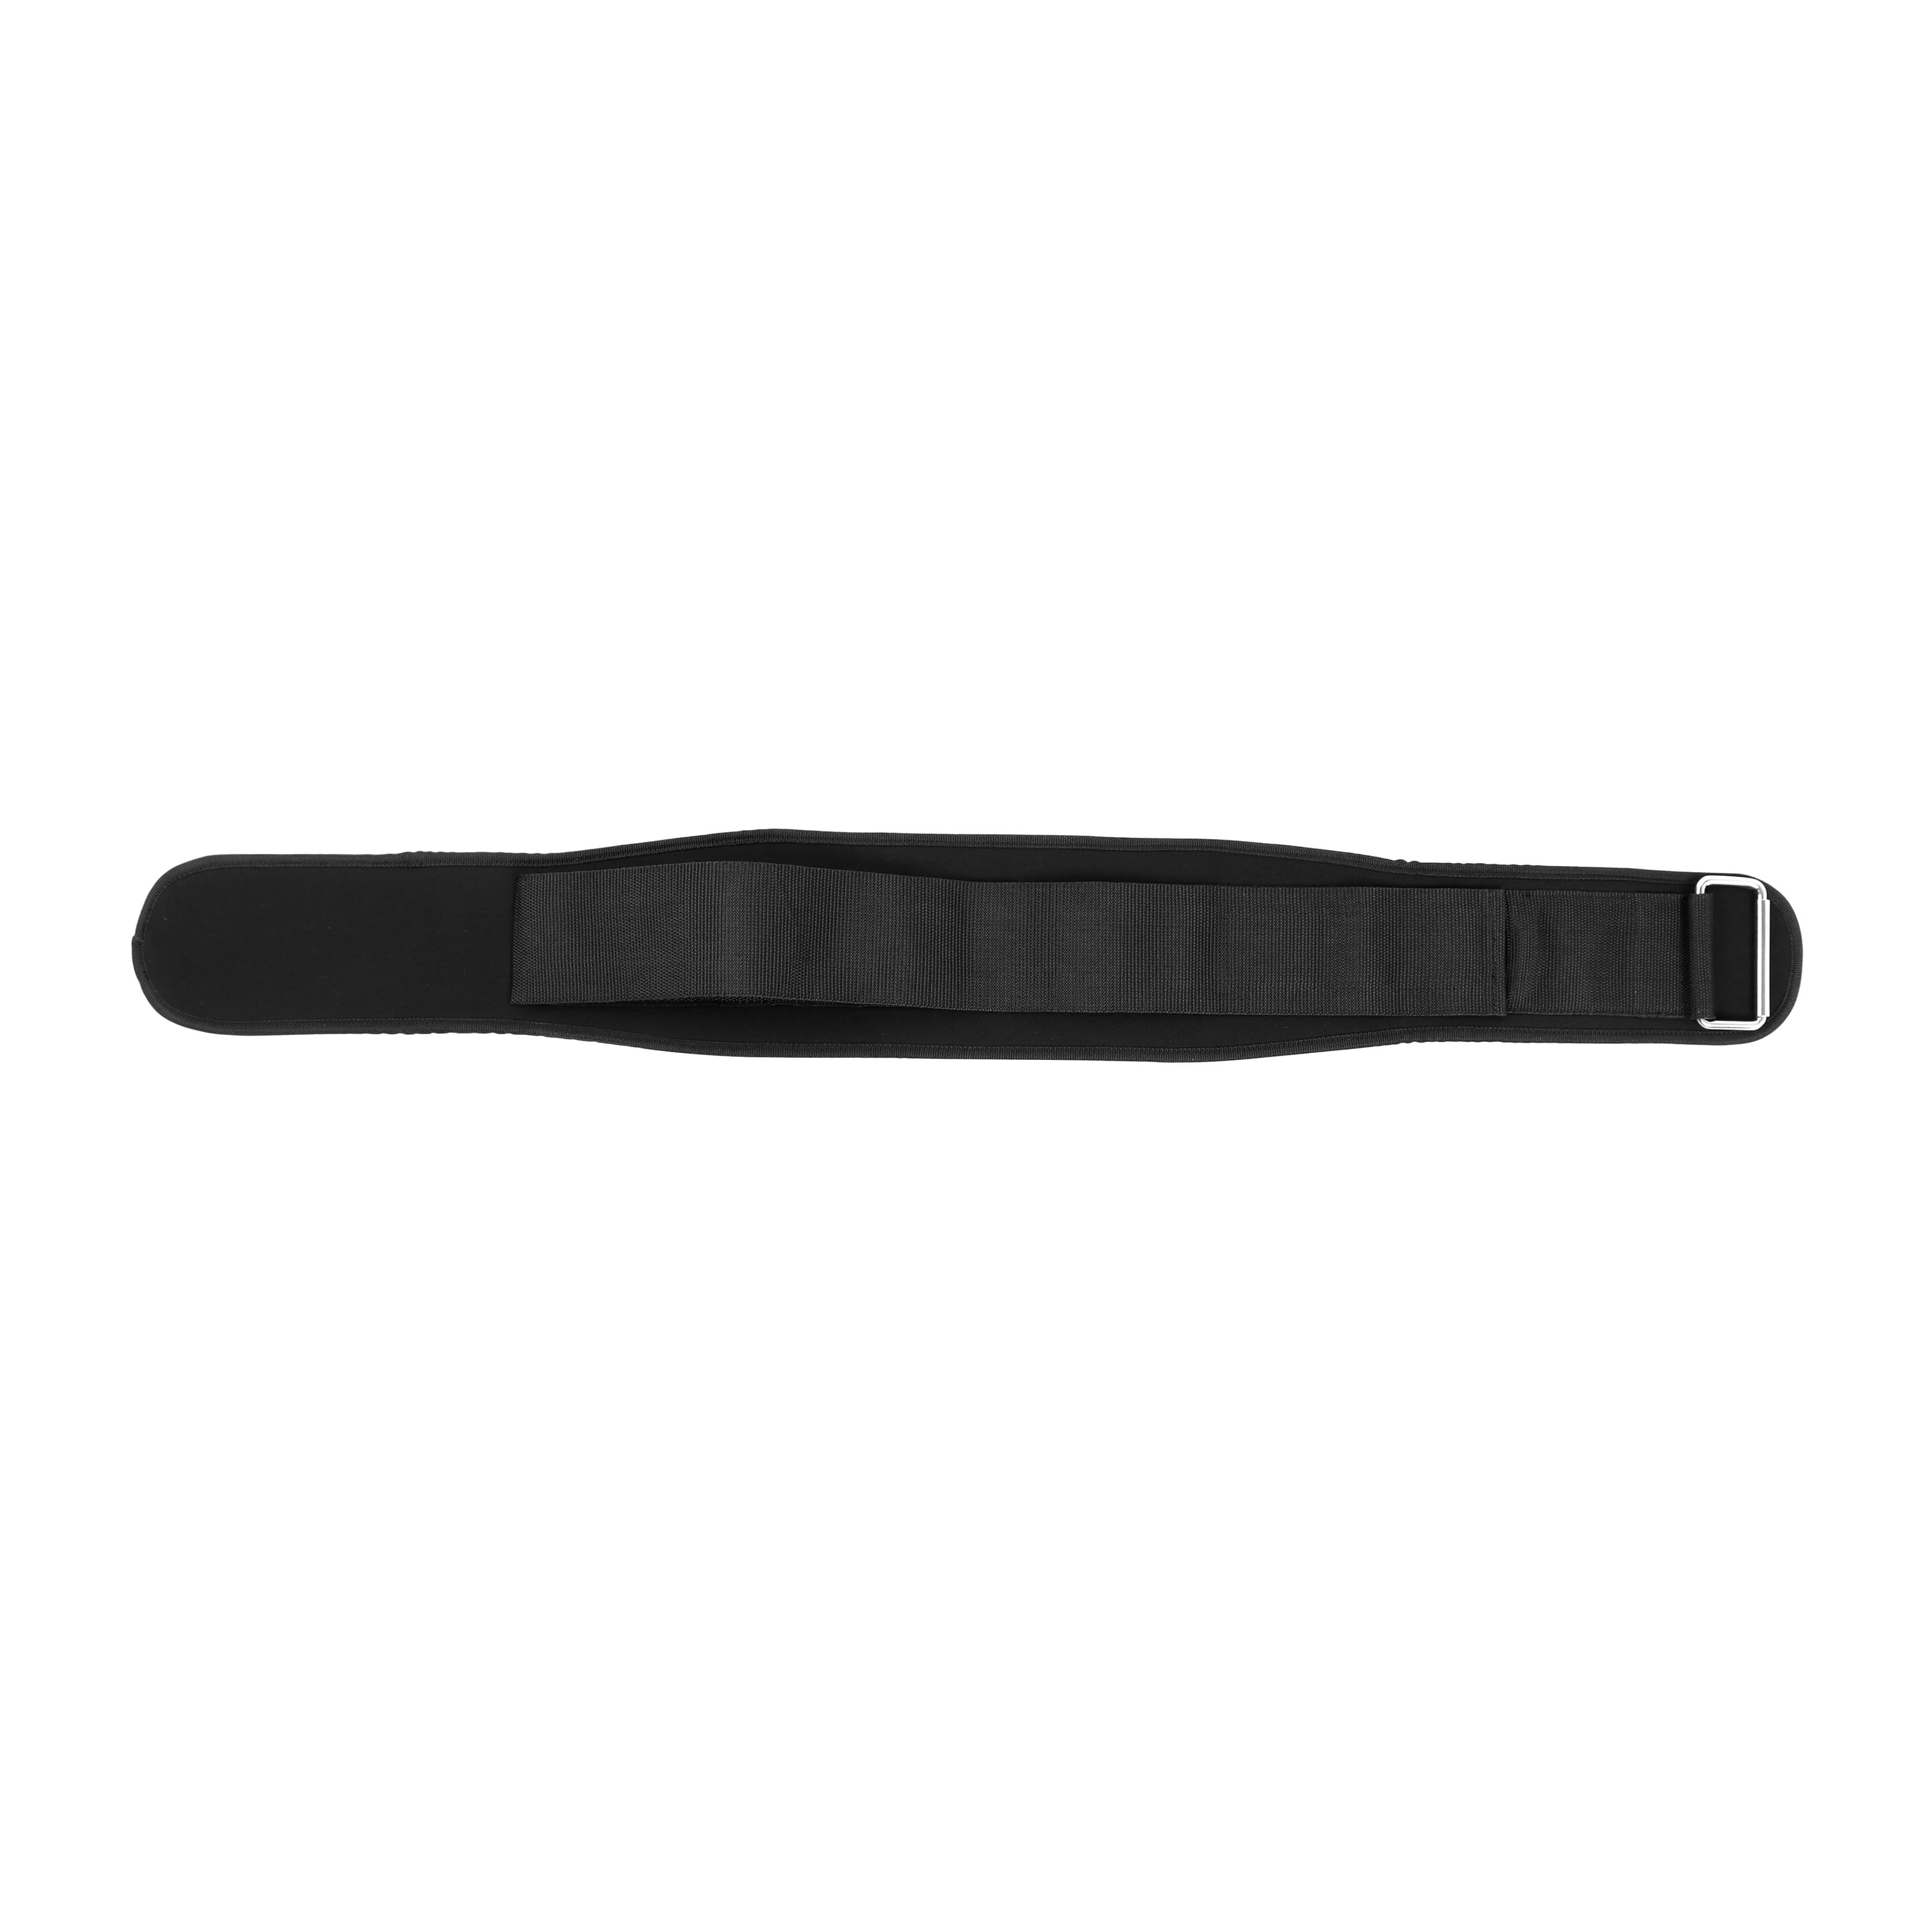 SHRED Belt Black - 2021/22, Ski Equipment \ Accessories \ Others